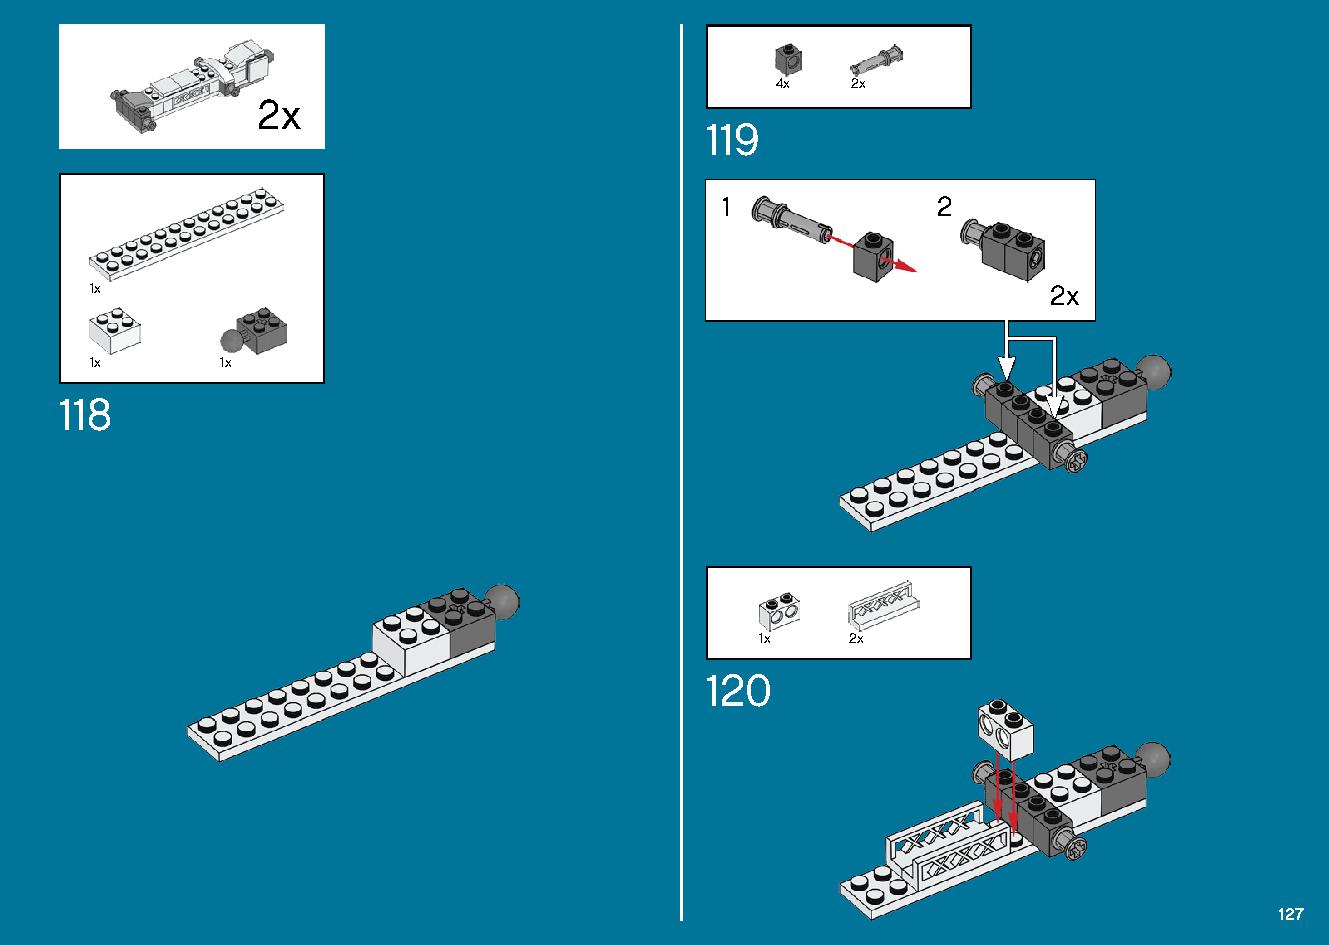 International Space Station 21321 レゴの商品情報 レゴの説明書・組立方法 127 page